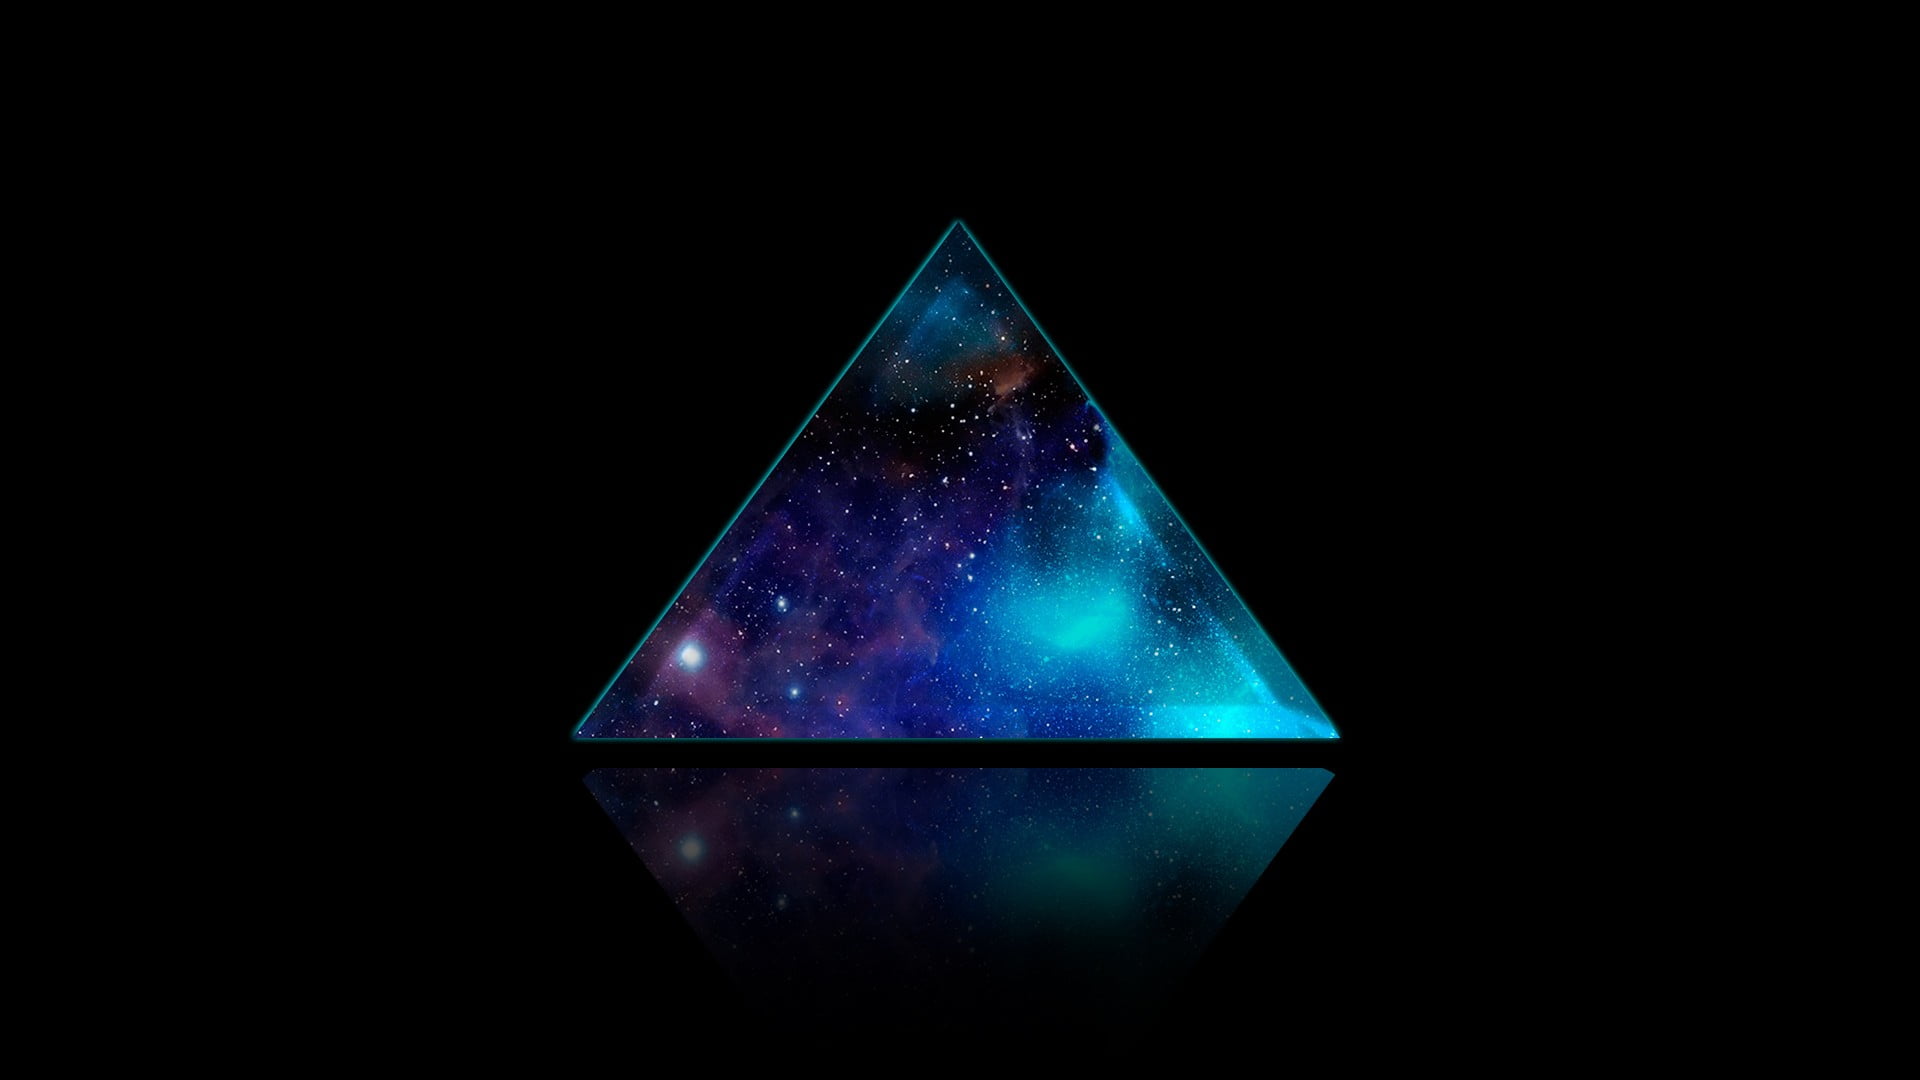 https://www.wallpaperflare.com/static/376/783/830/space-triangle-galaxy-backgound-wallpaper.jpg